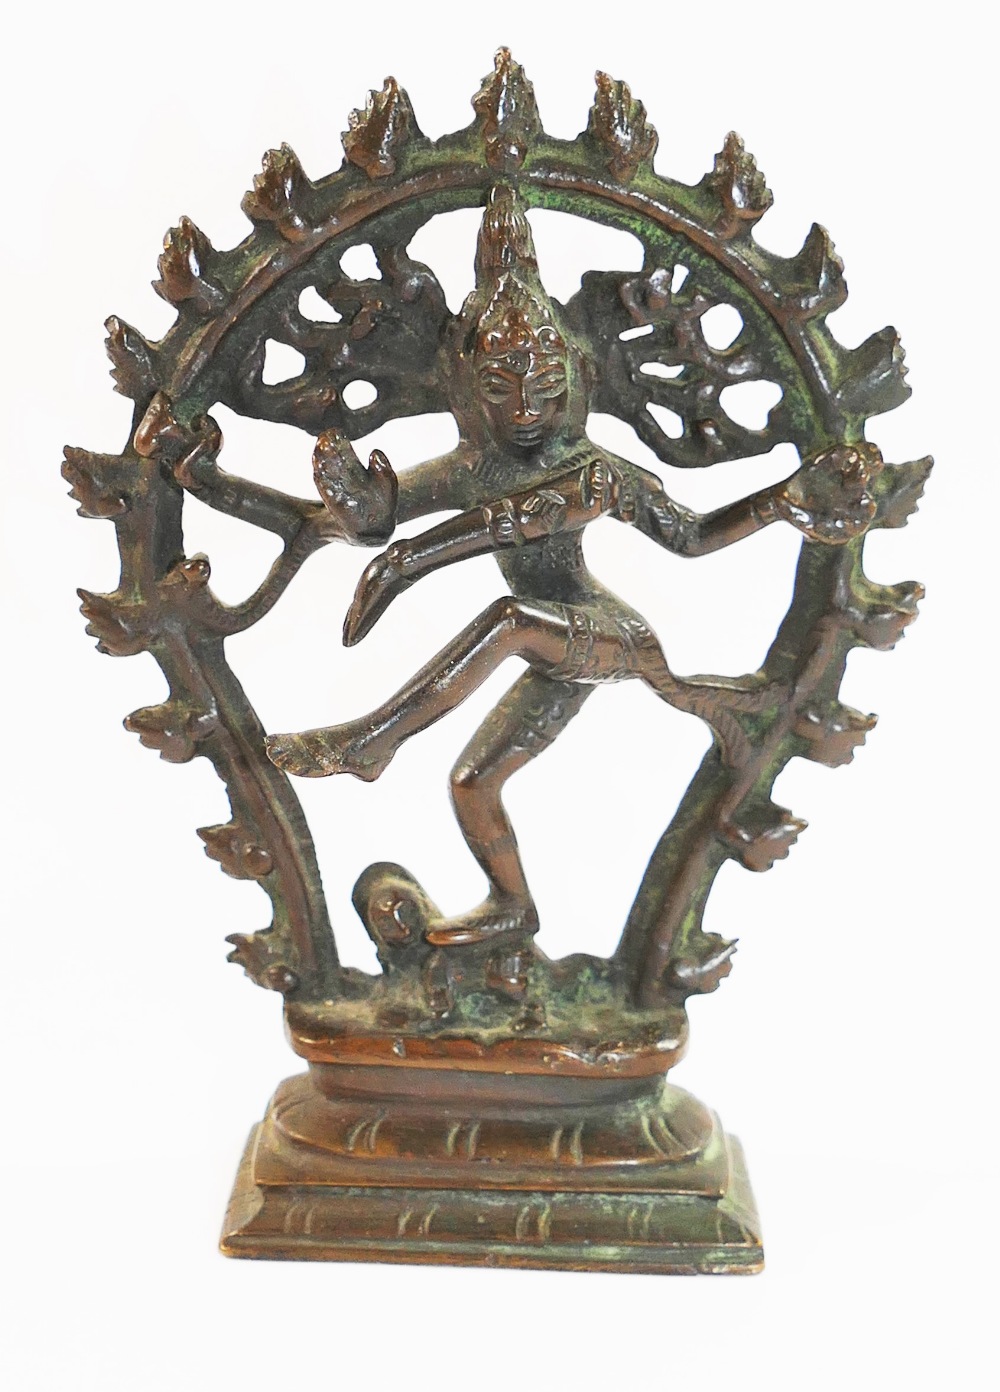 A small Indian bronze of the Hindu godde